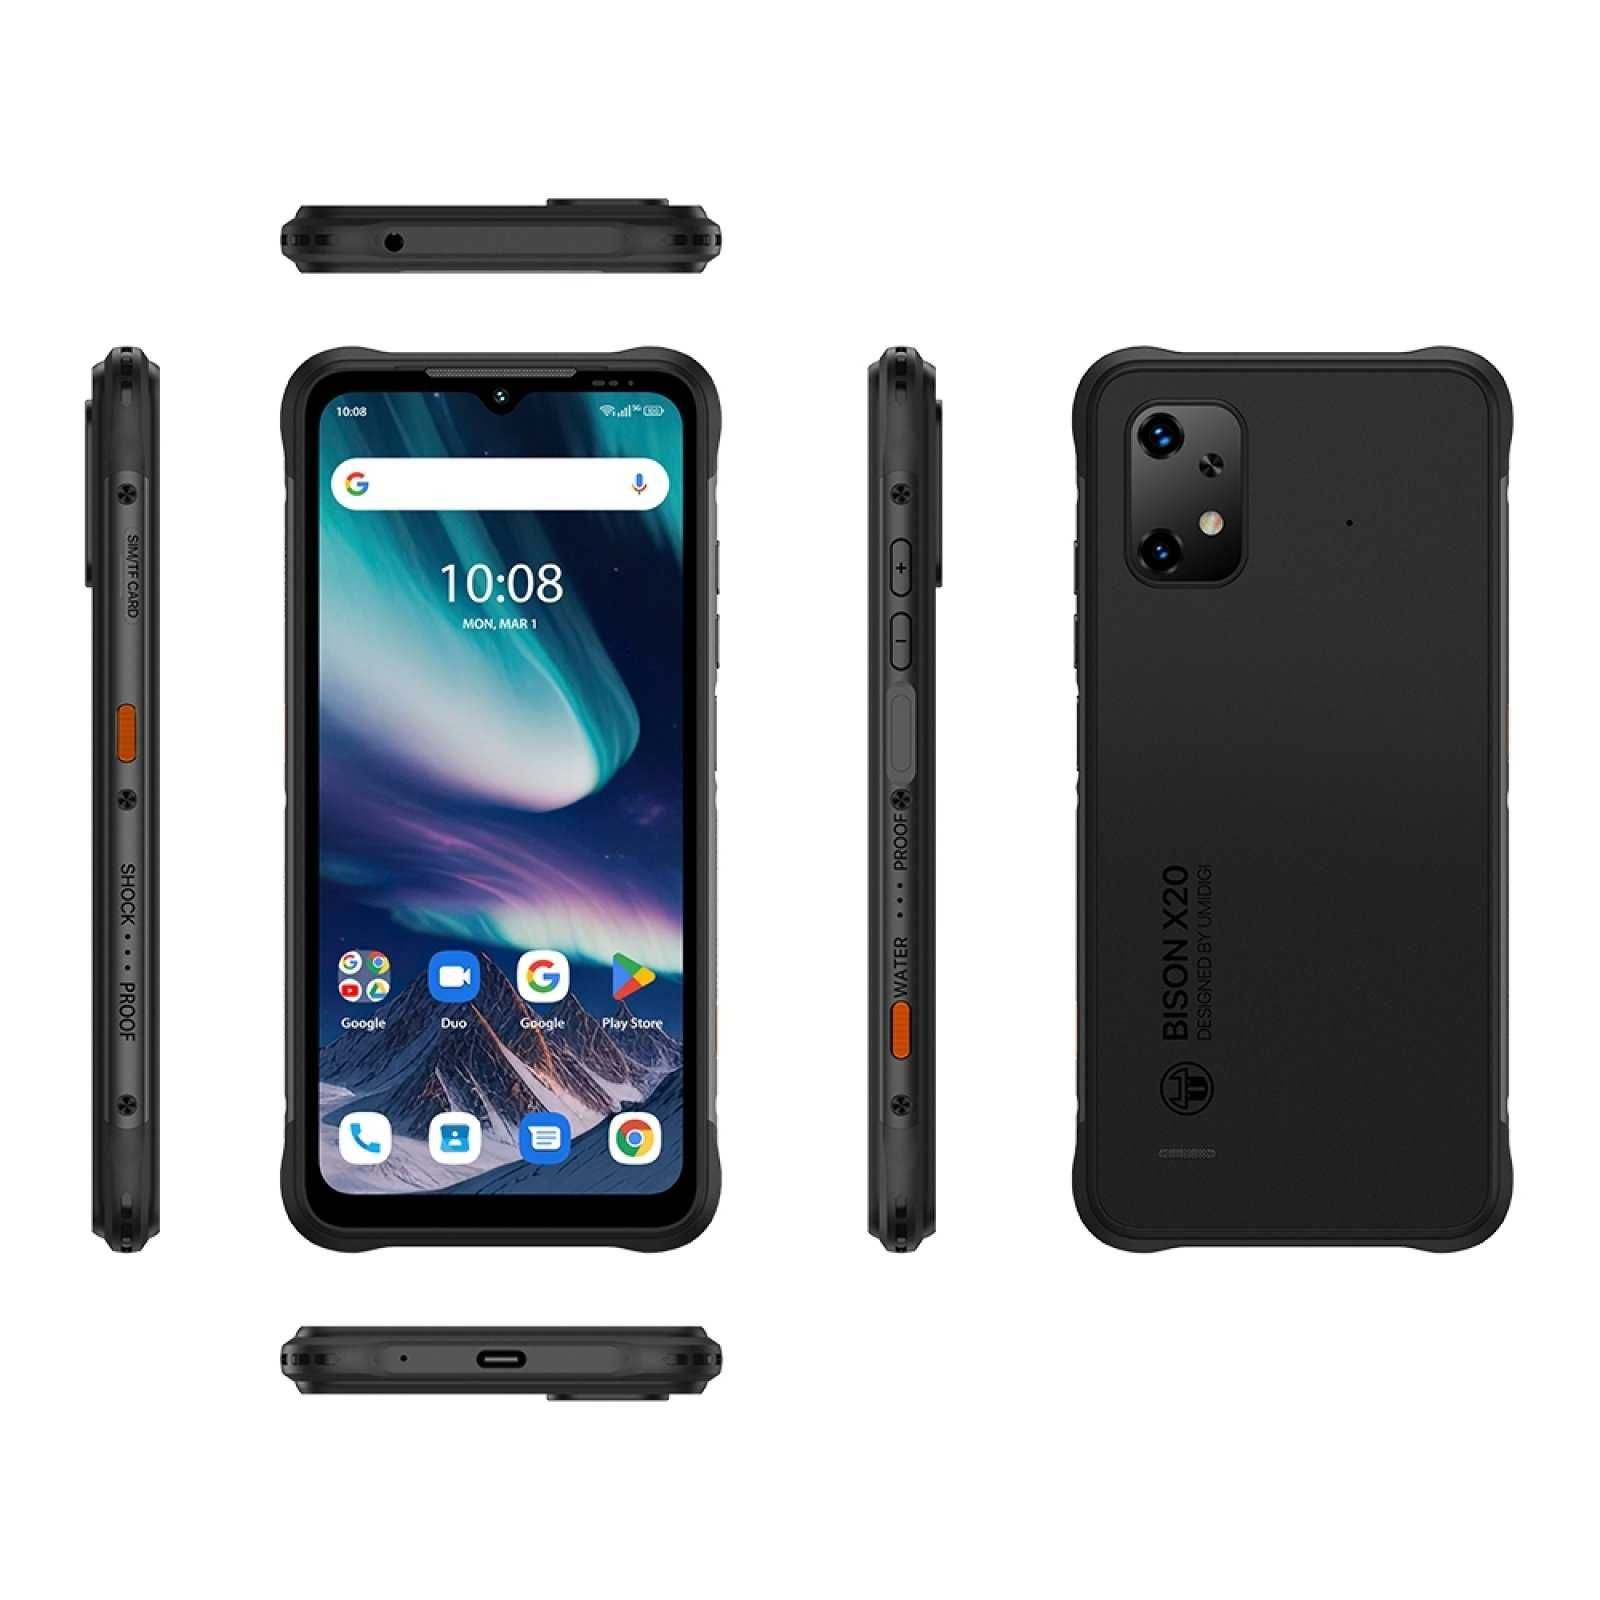 Захищений смартфон Umidigi Bison X20 6+6ГБ/128ГБ NFC (Global Version)